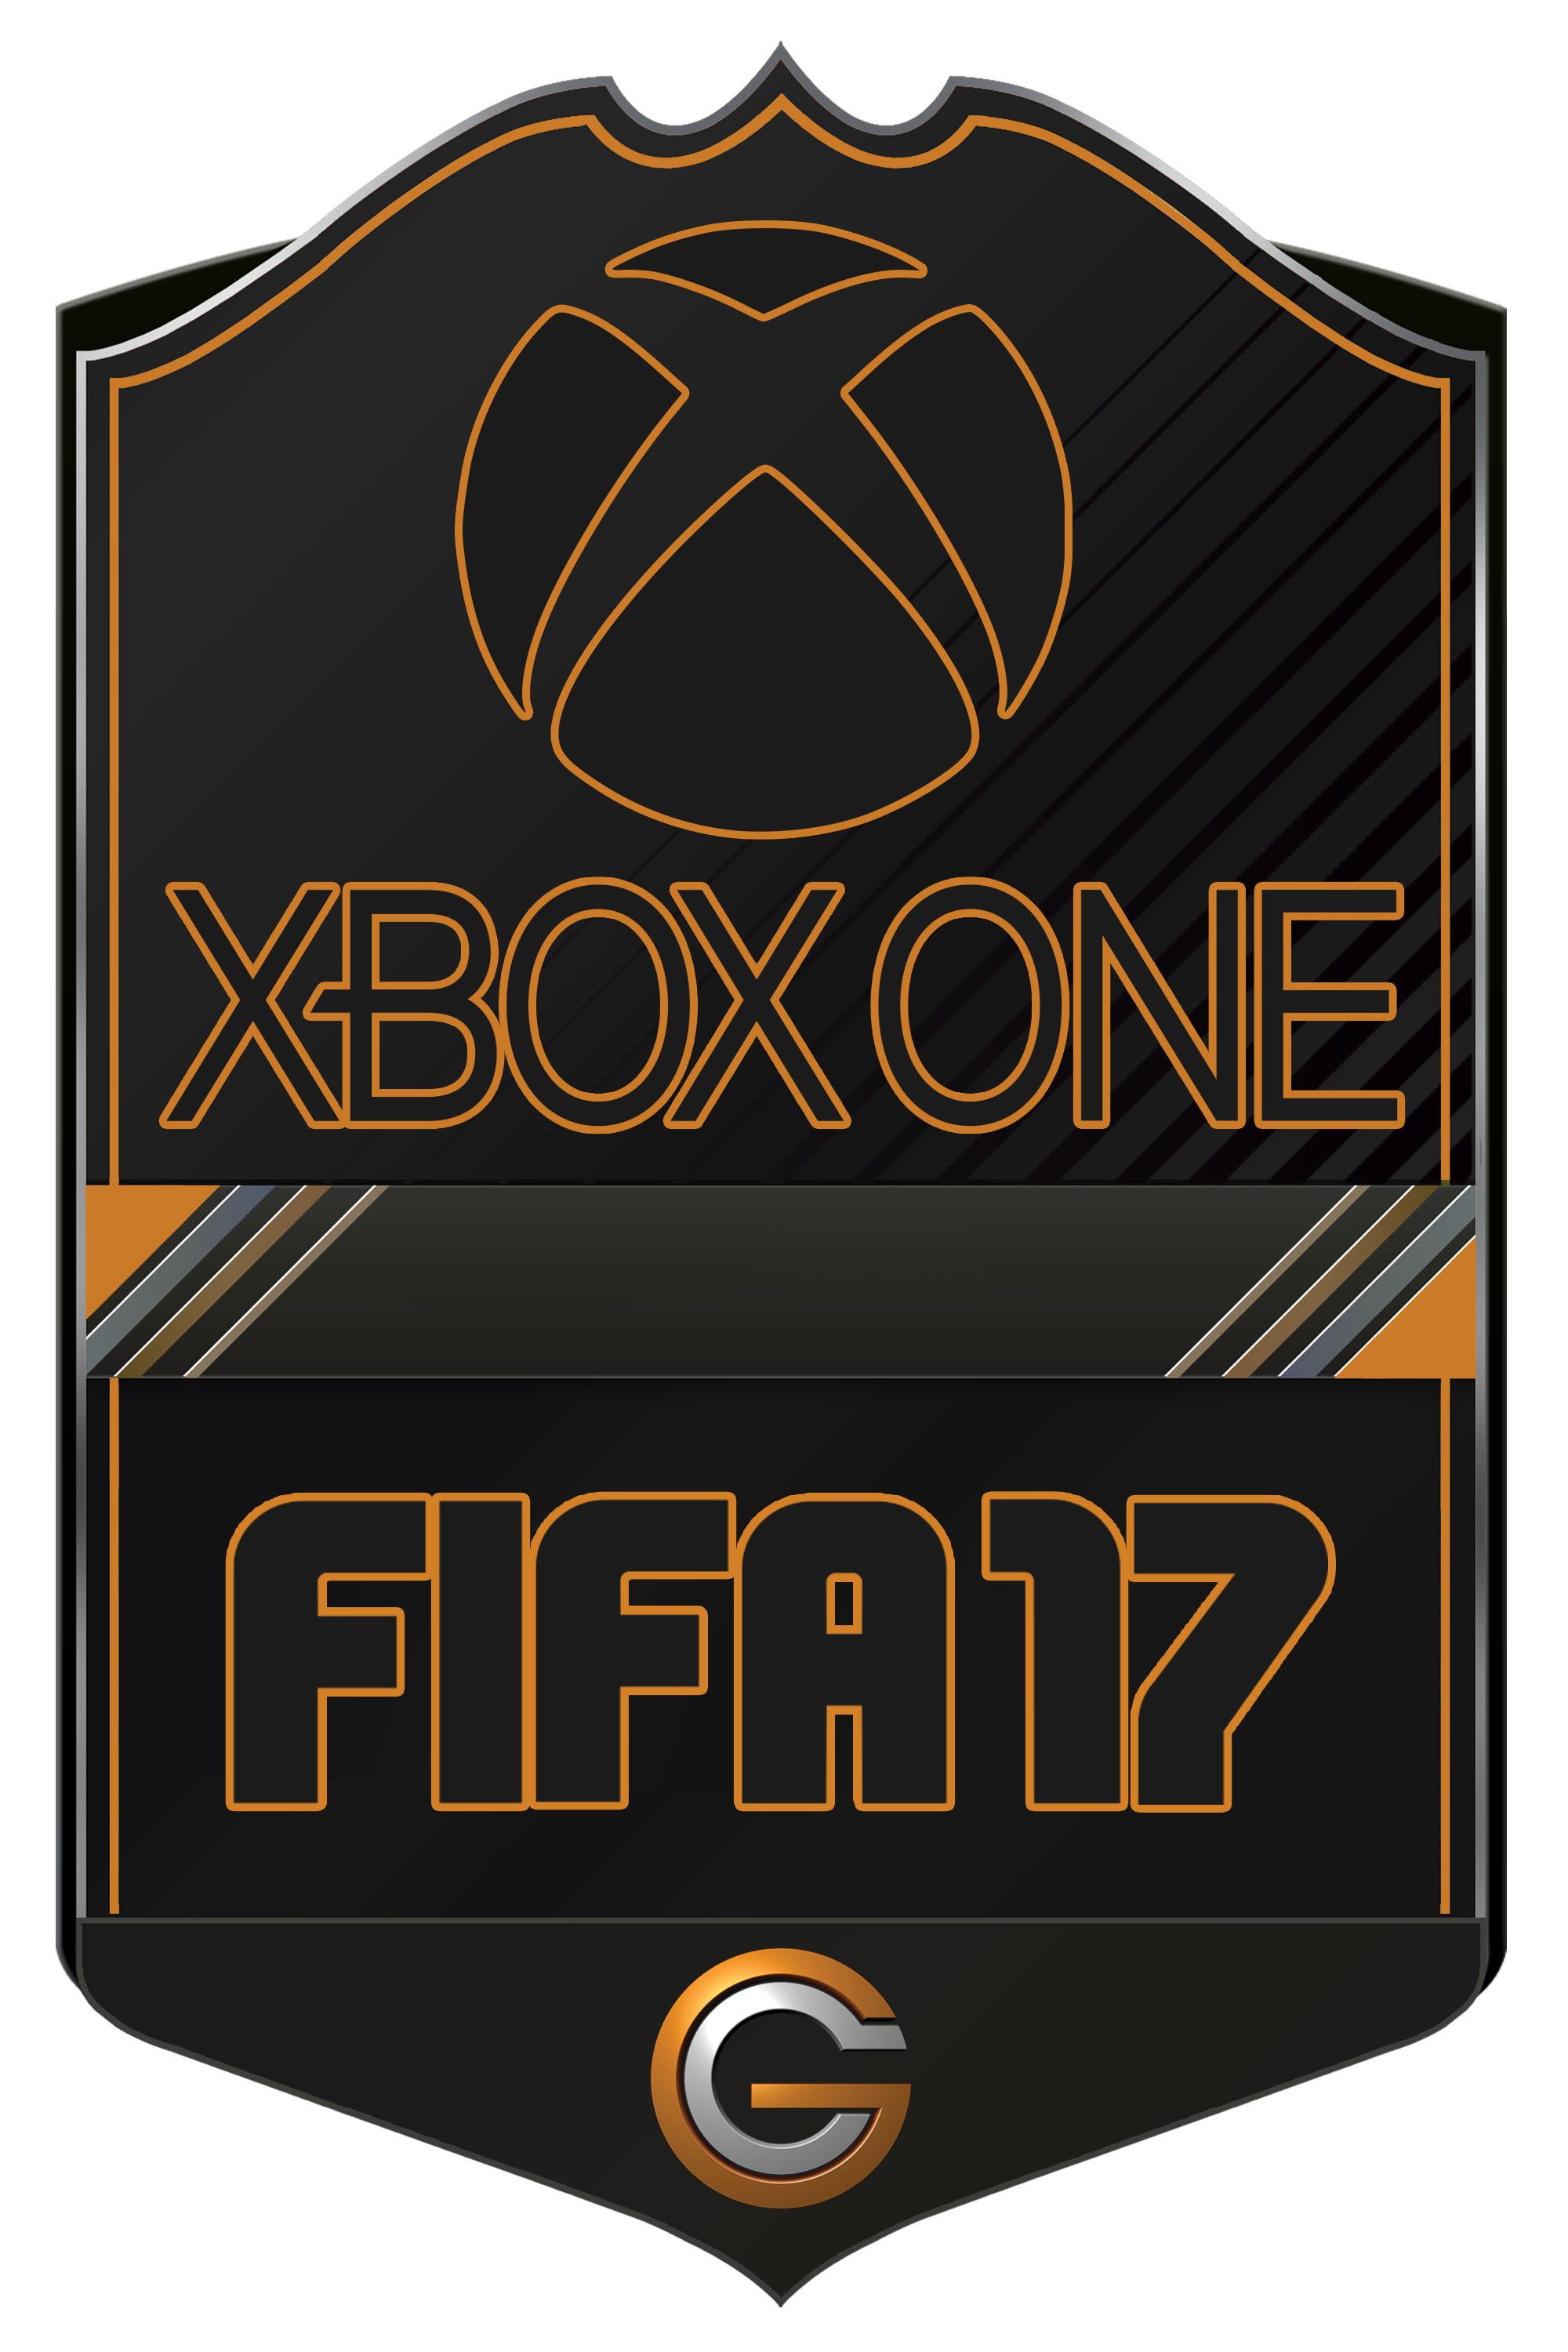 FIFA 17 XBOX ONE COINS